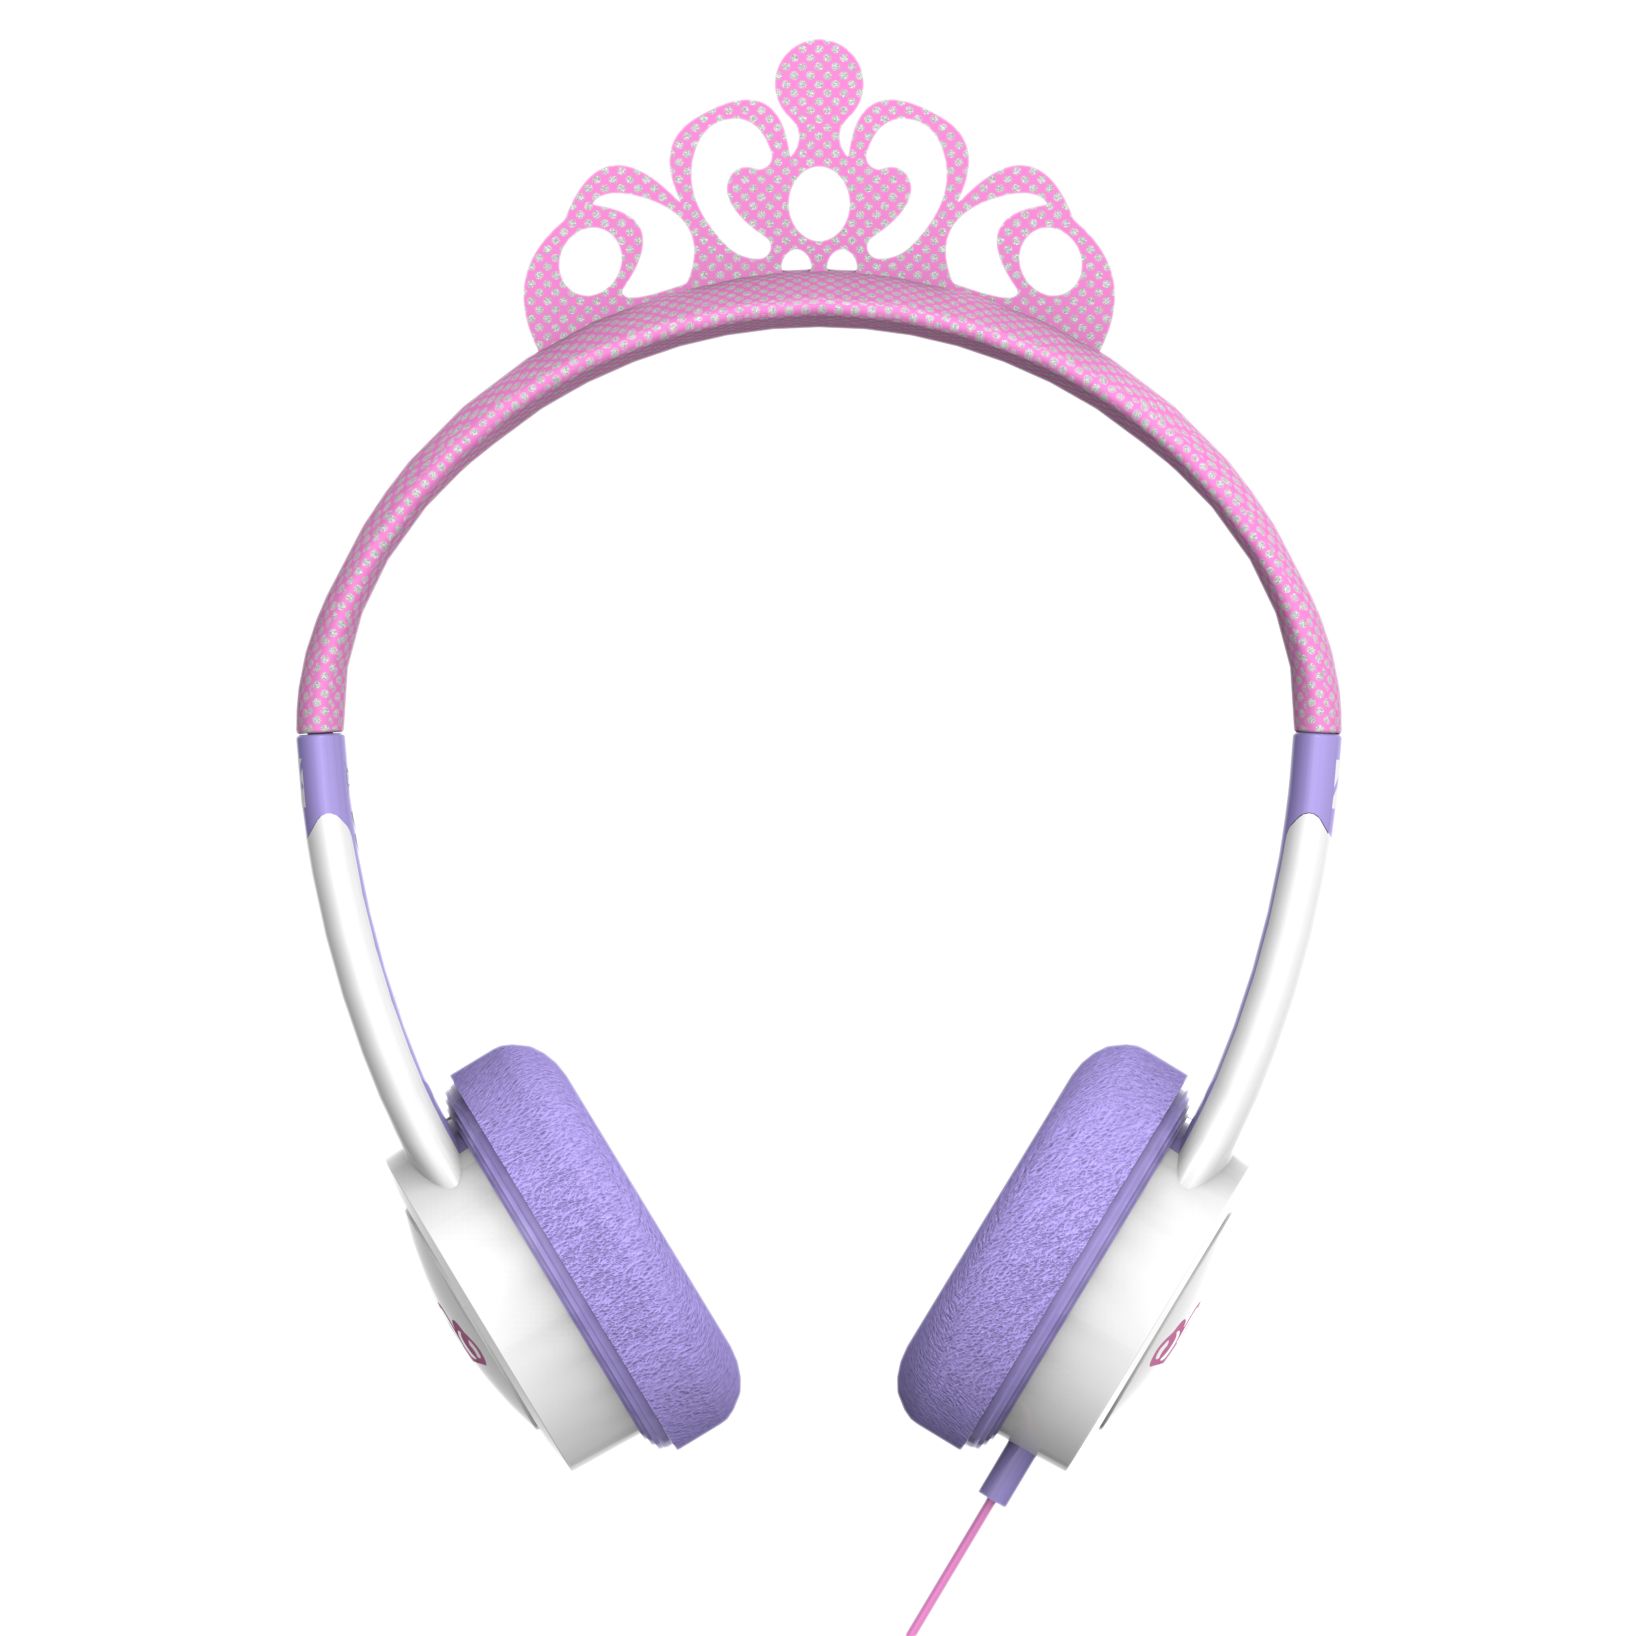 ZAGG ifrogz Little Rockerz Children's Volume Limiting On-Ear Headphones, Princess Review thumbnail